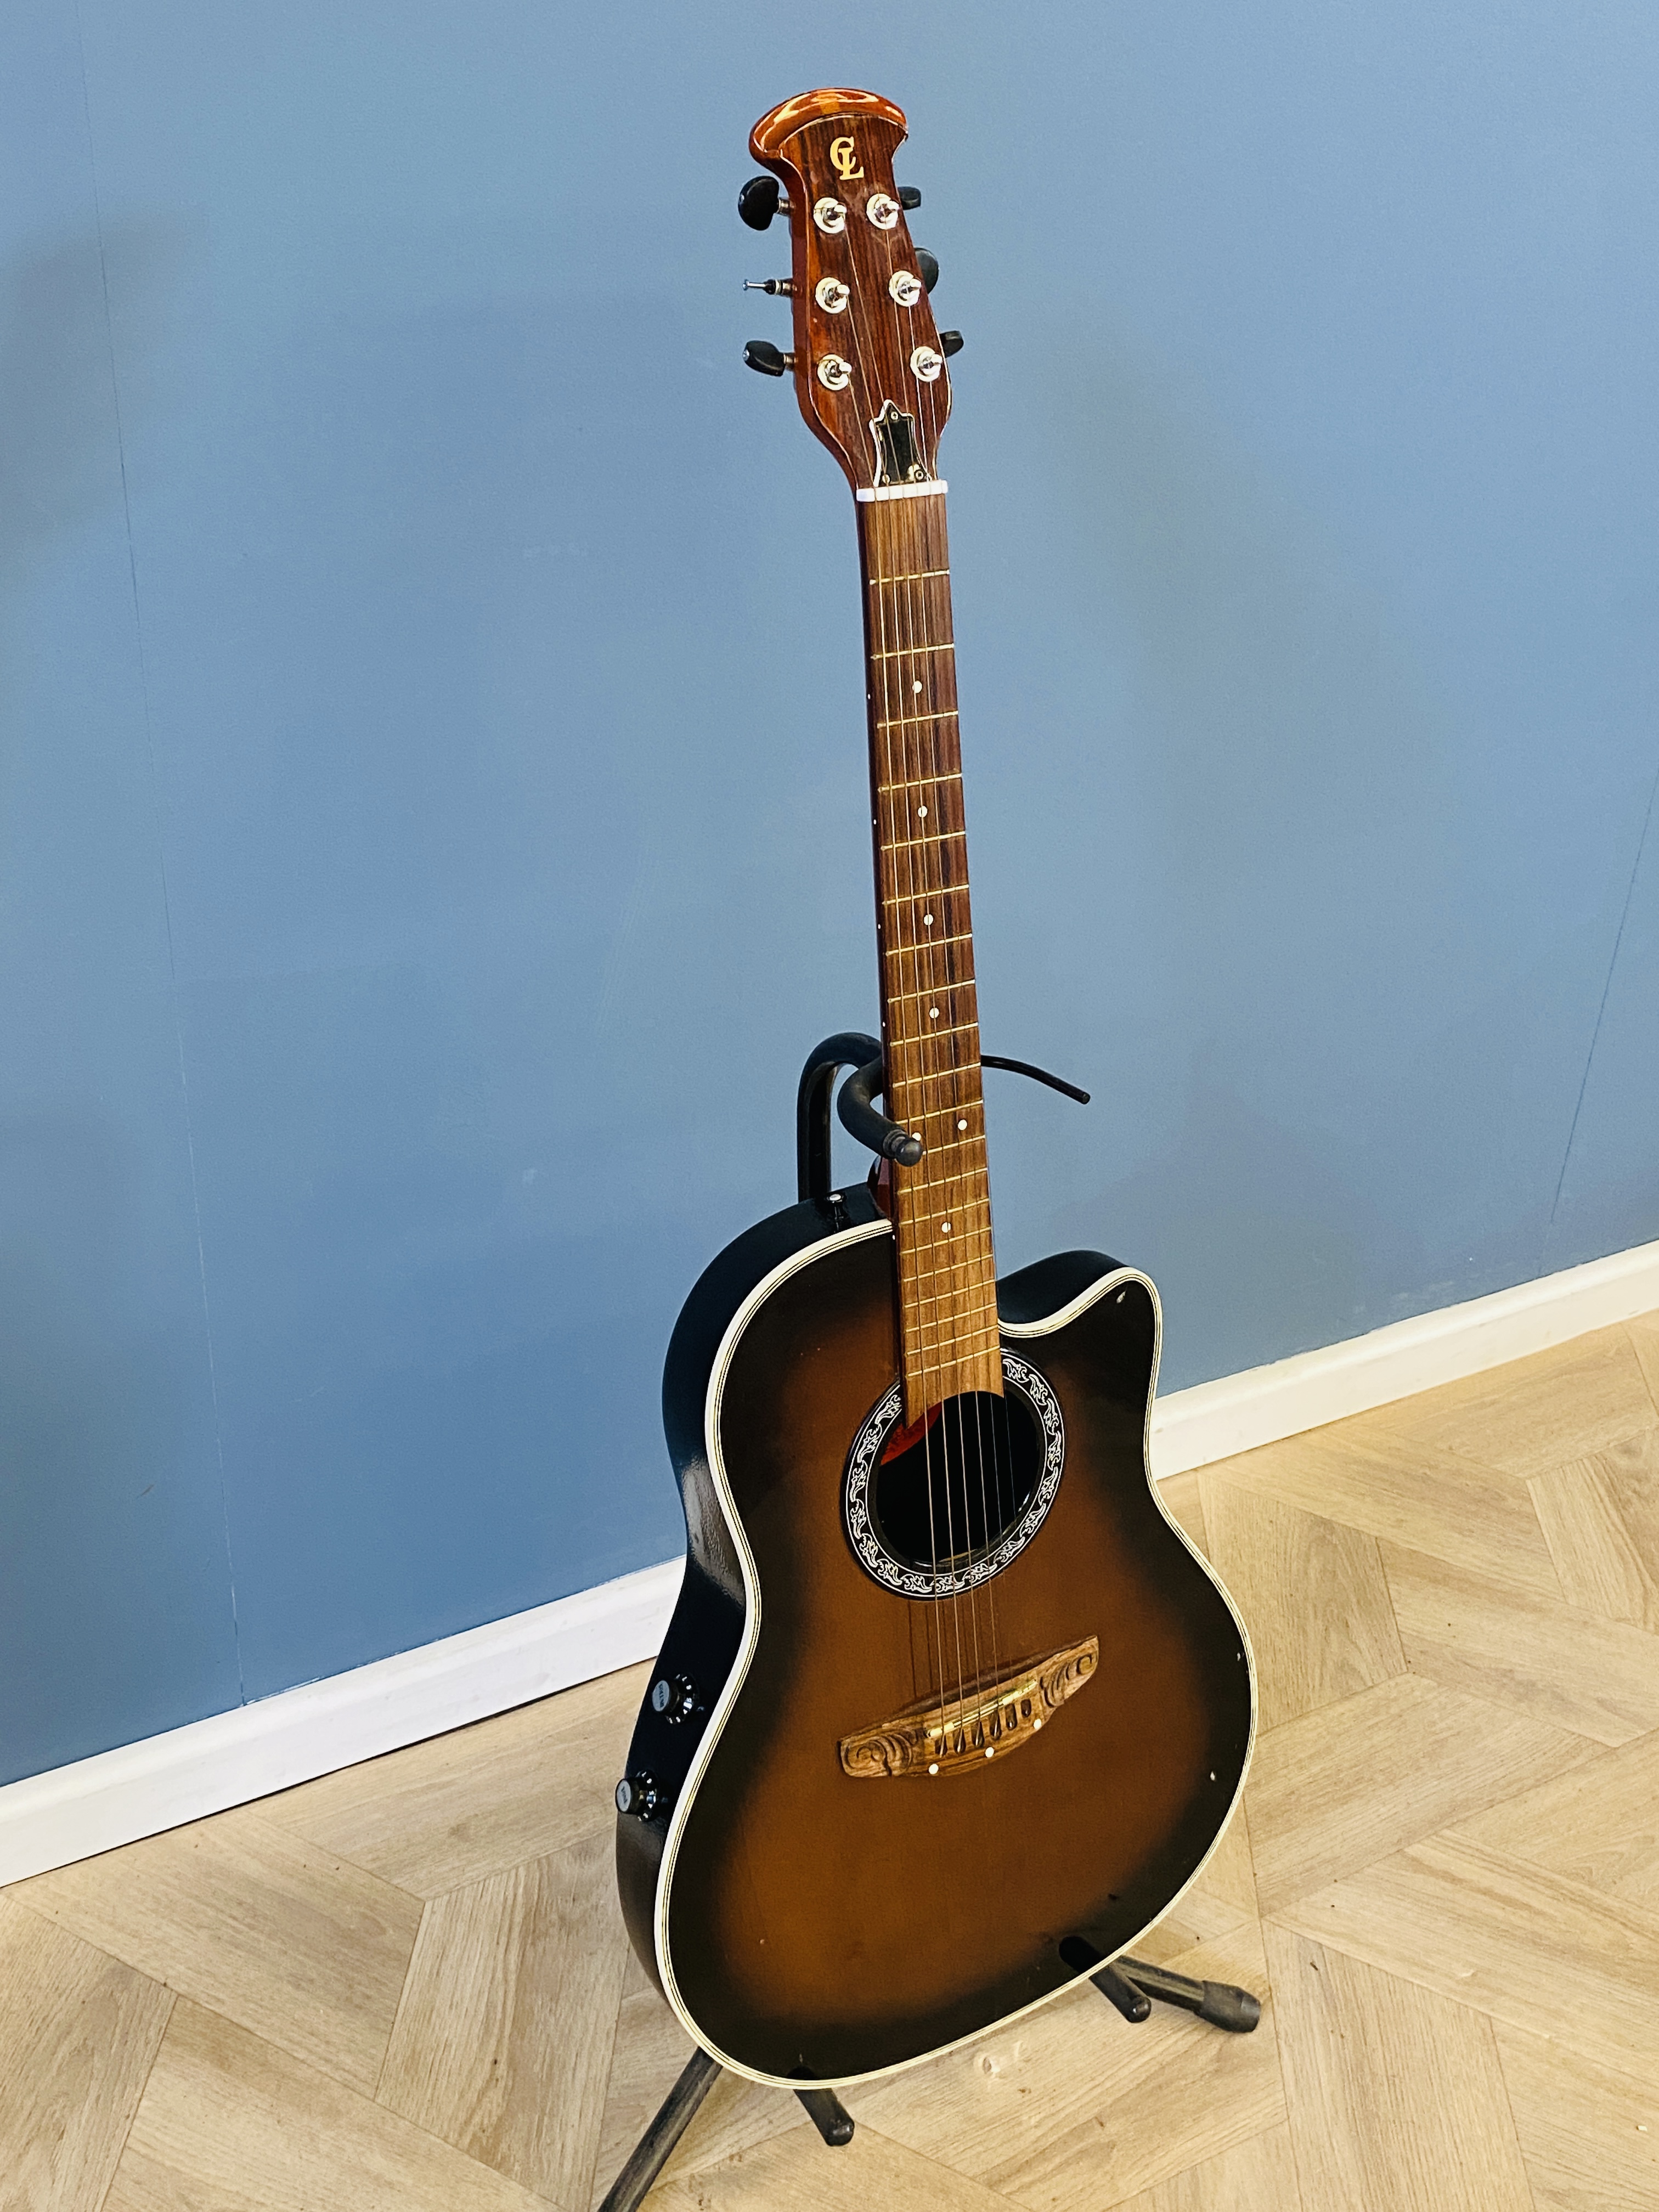 Clarissa G300 electro acoustic roundback guitar. - Image 2 of 4